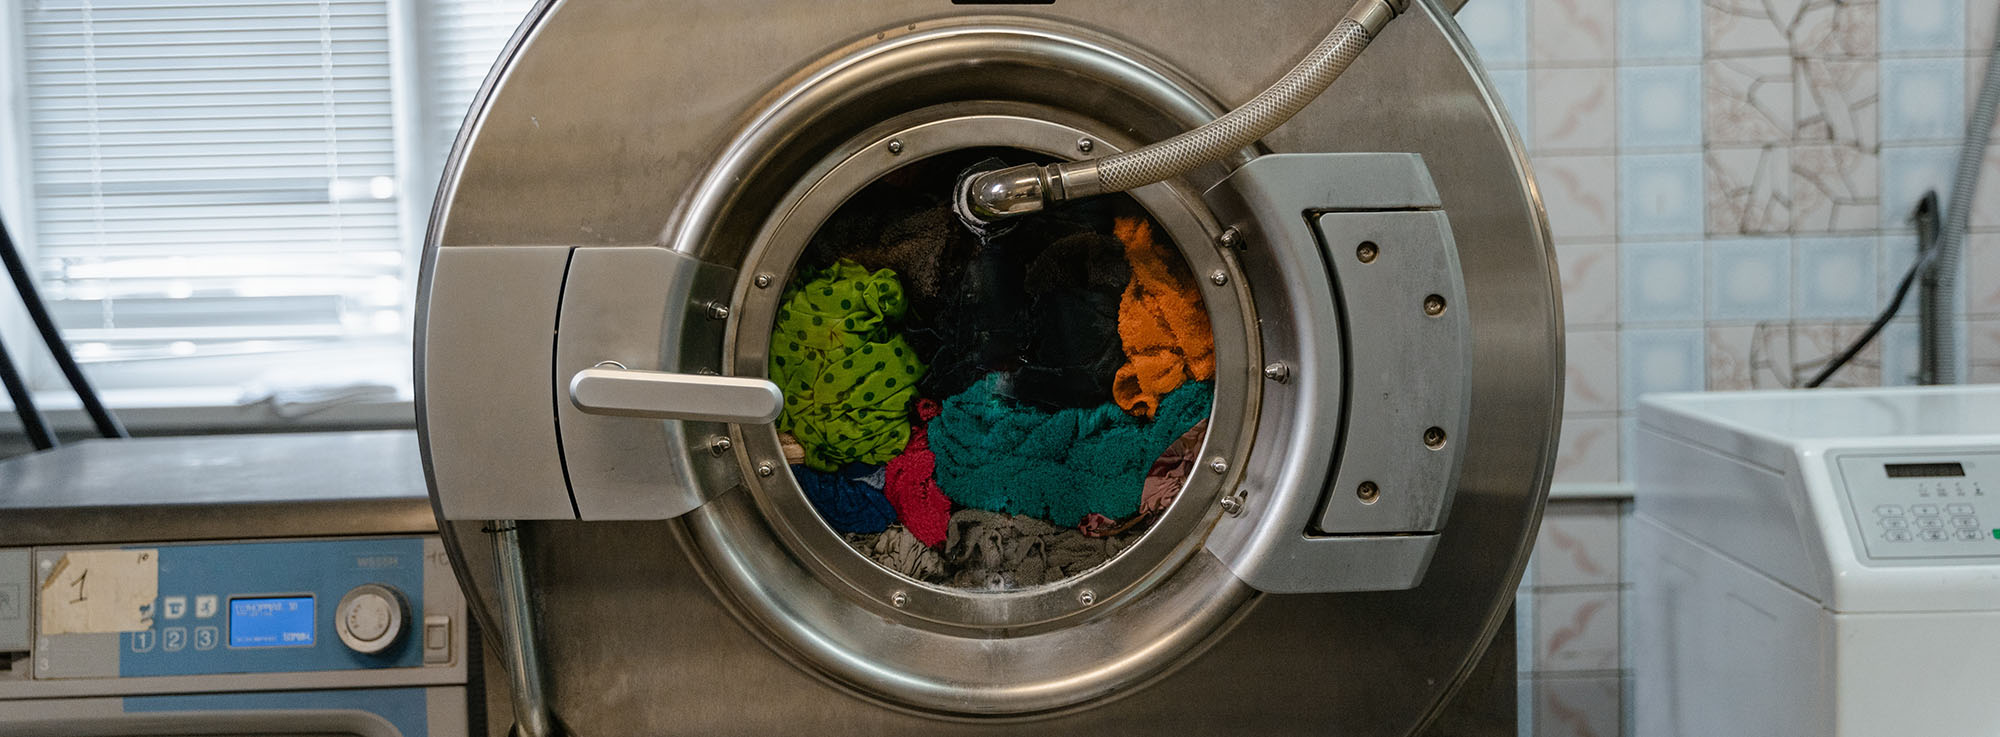 A Bulk Laundry Machine